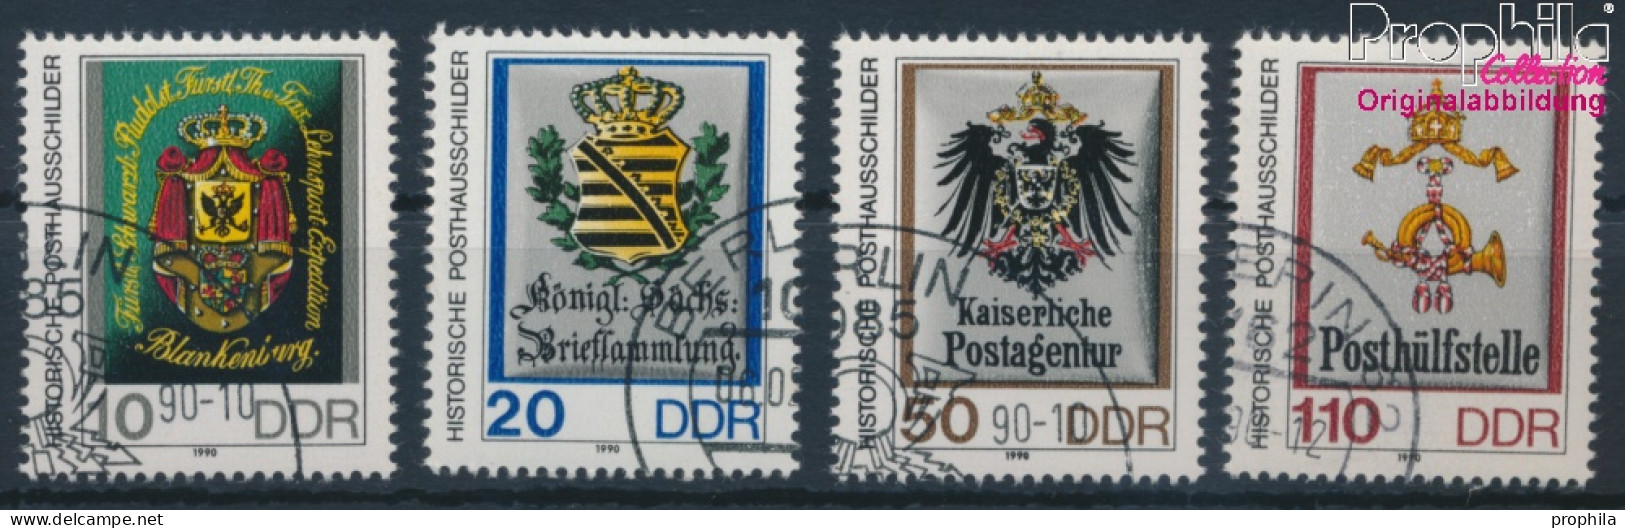 DDR 3302-3305 (kompl.Ausgabe) Gestempelt 1990 Posthausschilder Kleinformat (10405745 - Usati